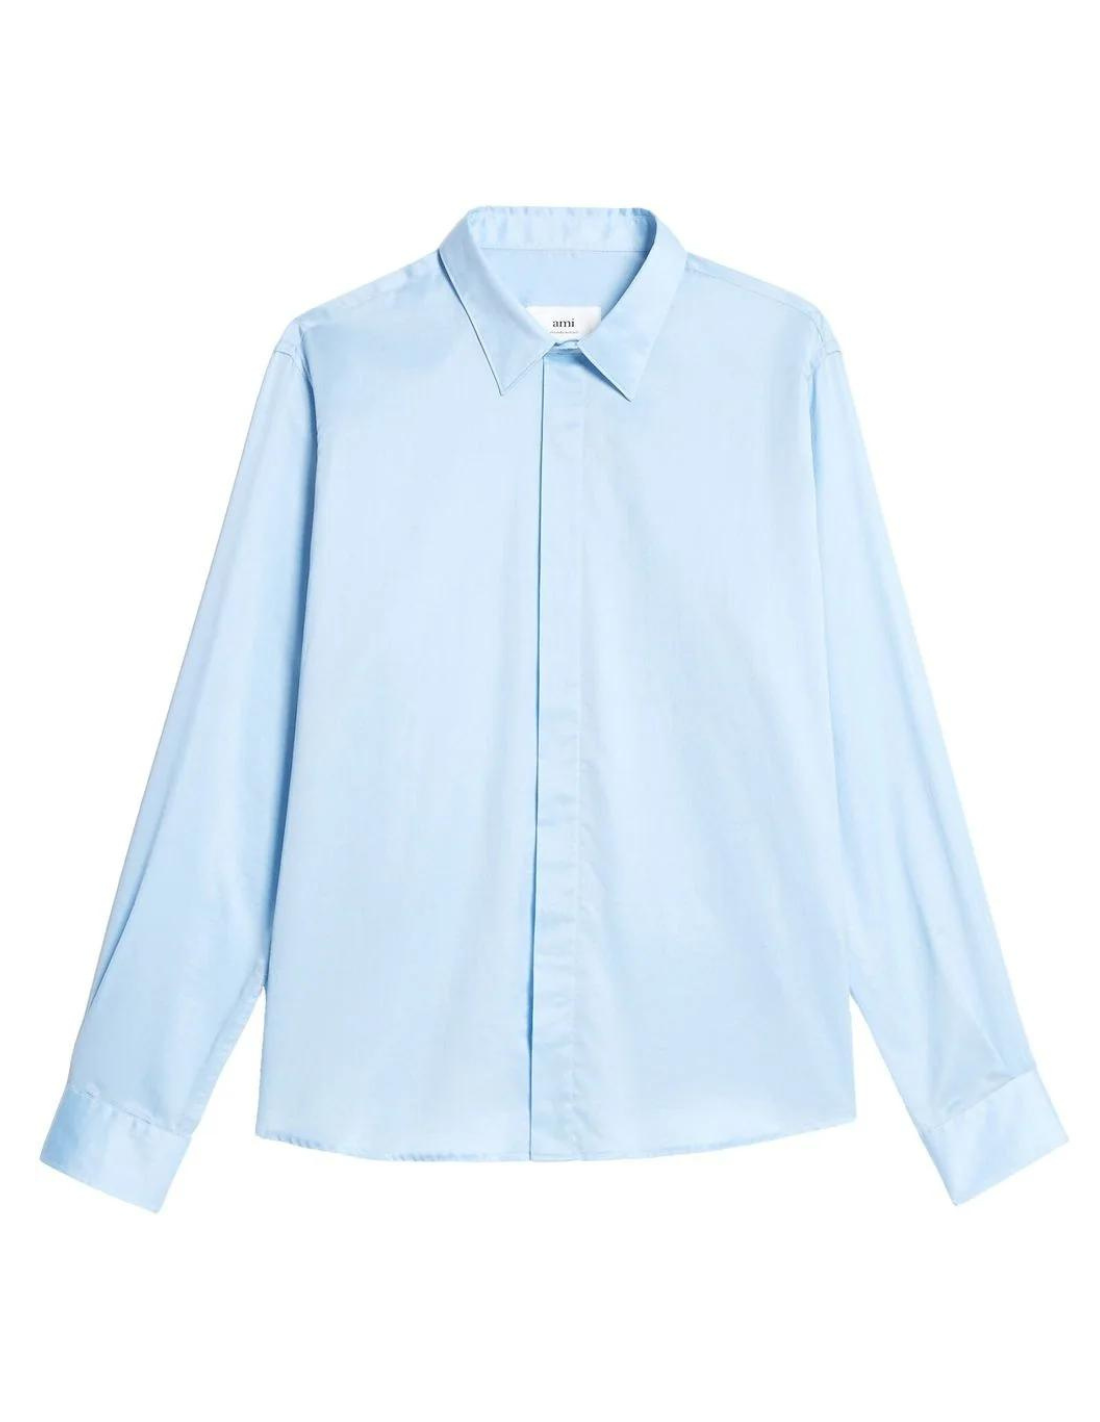 Ami Paris light blue cotton shirt - light blue